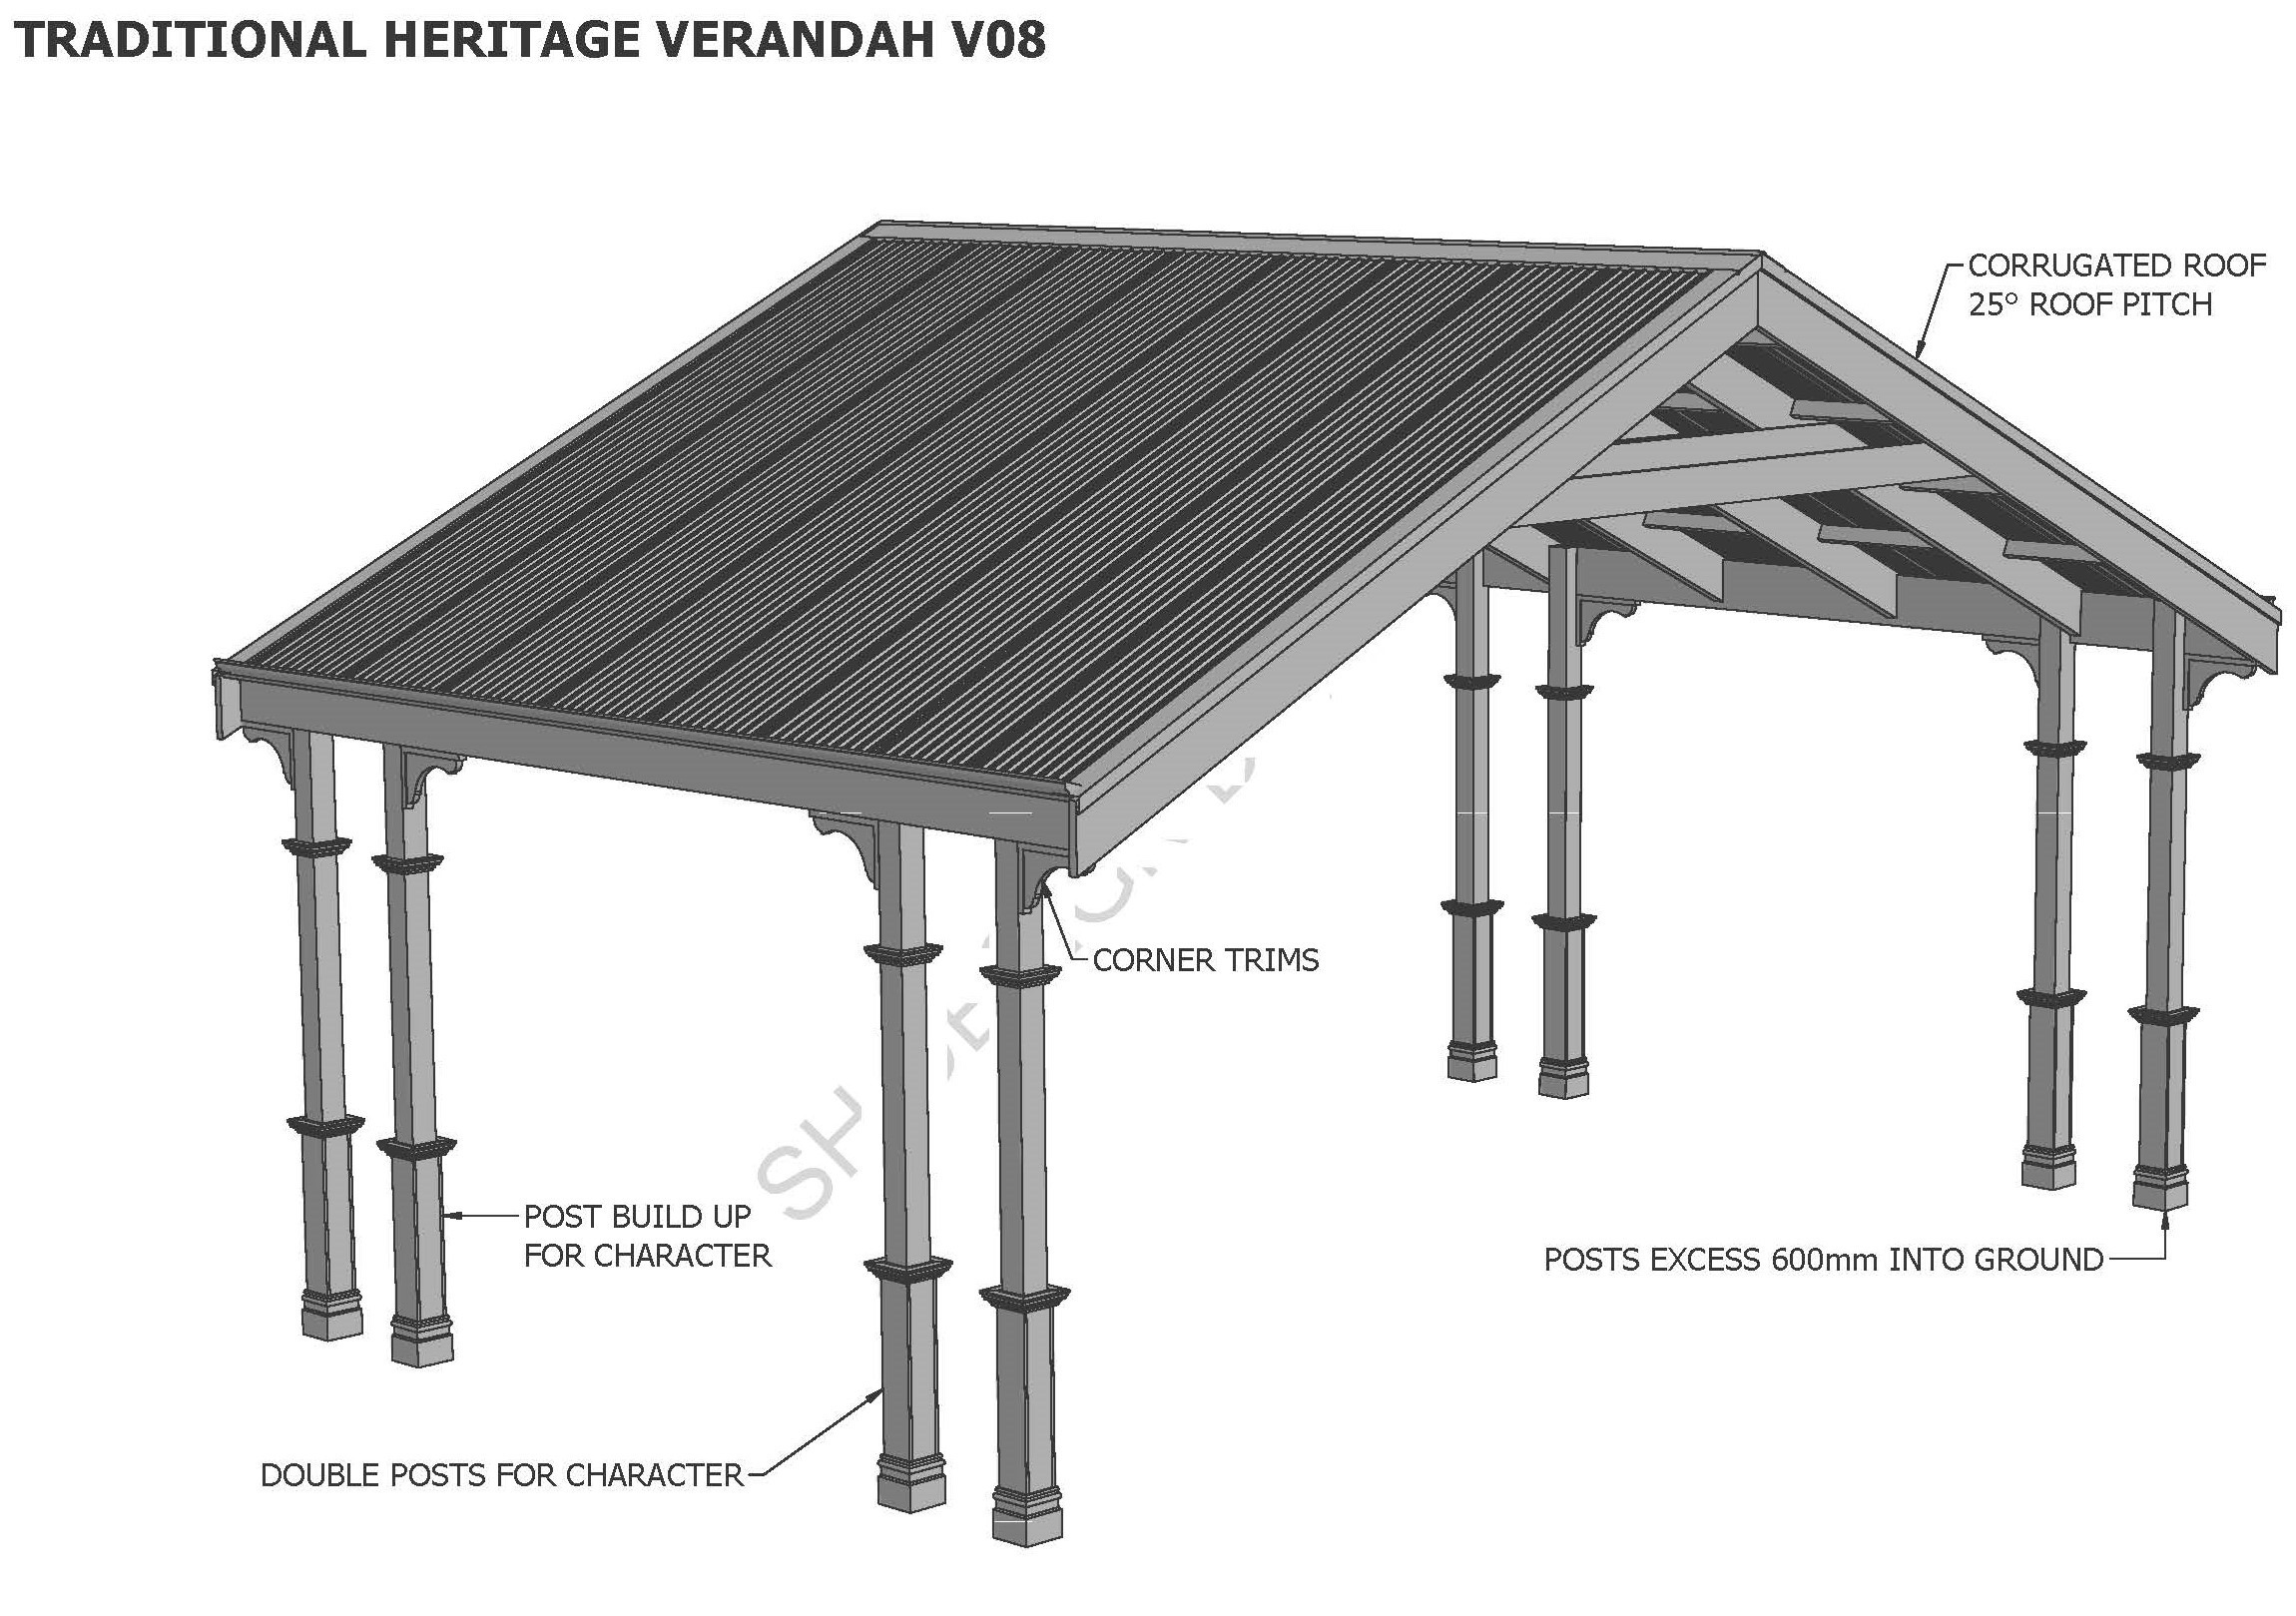 TRADITIONAL HERITAGE CARPORT / VERANDAH V08 (Building Plans ONLY)